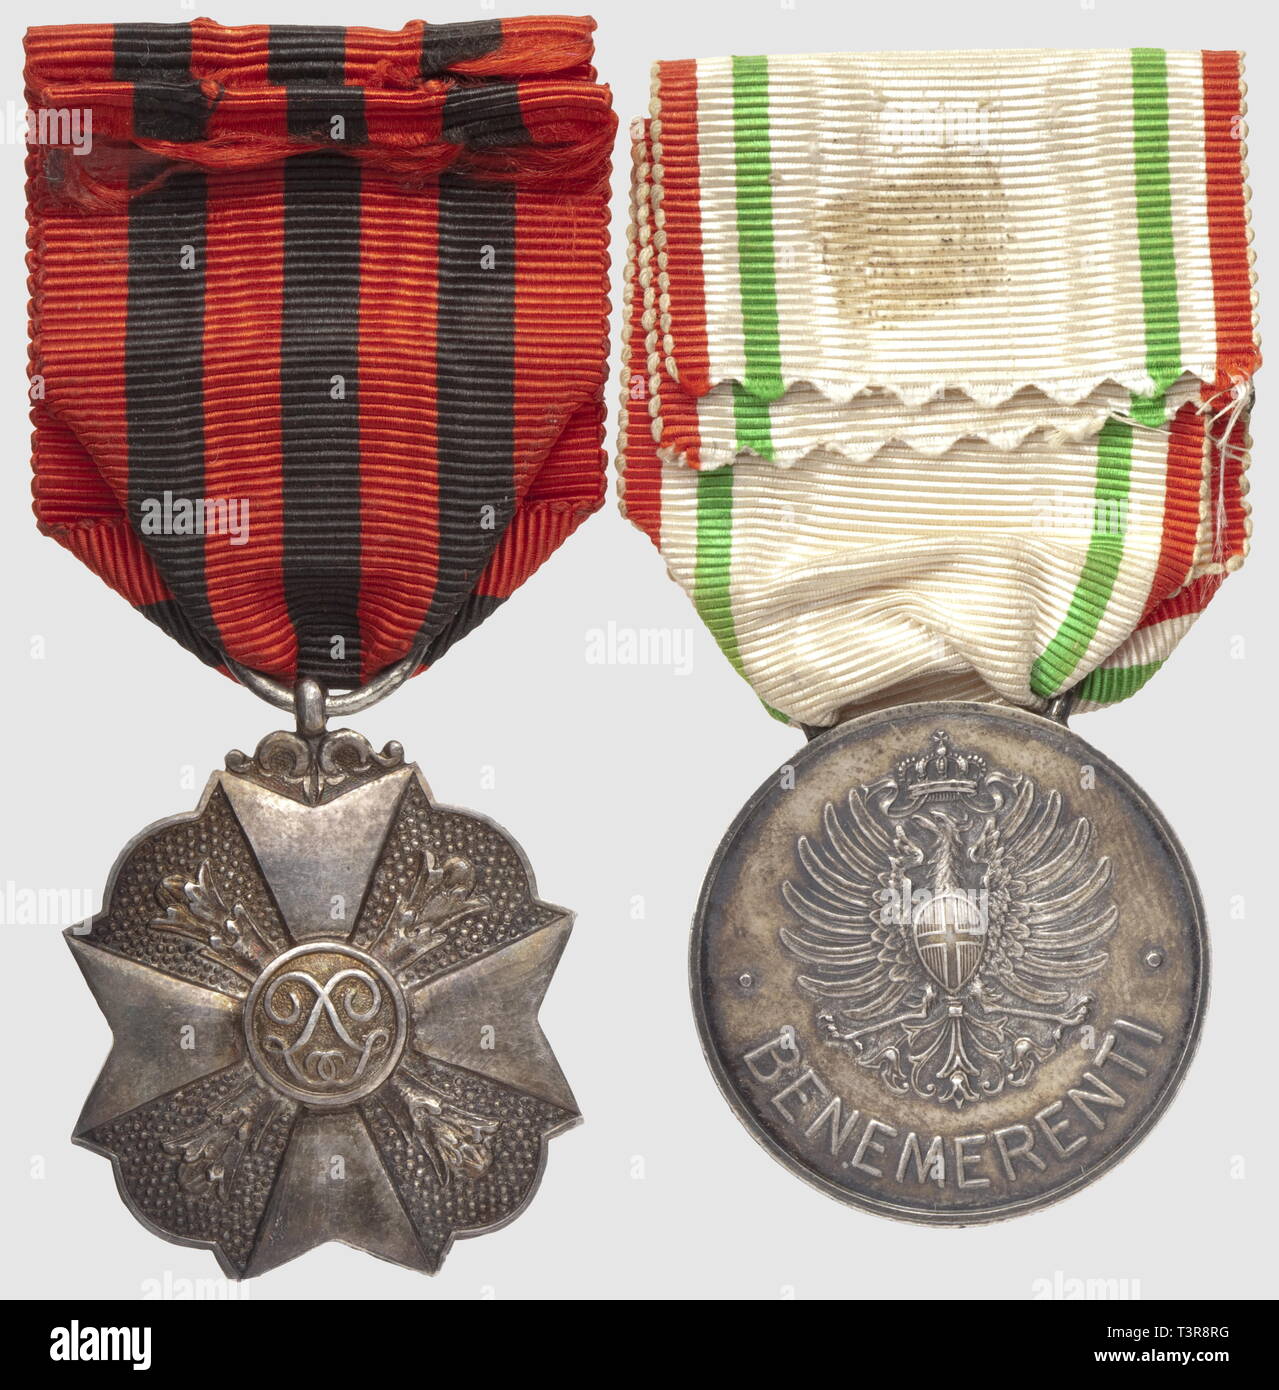 Médaille de la "Croce Rossa Italiana, "Benemerenti" en argent, avec sa rare barrette "Campagna Italo-Austriaca 1915-16", Additional-Rights-Clearance-Info-Not-Available Stock Photo